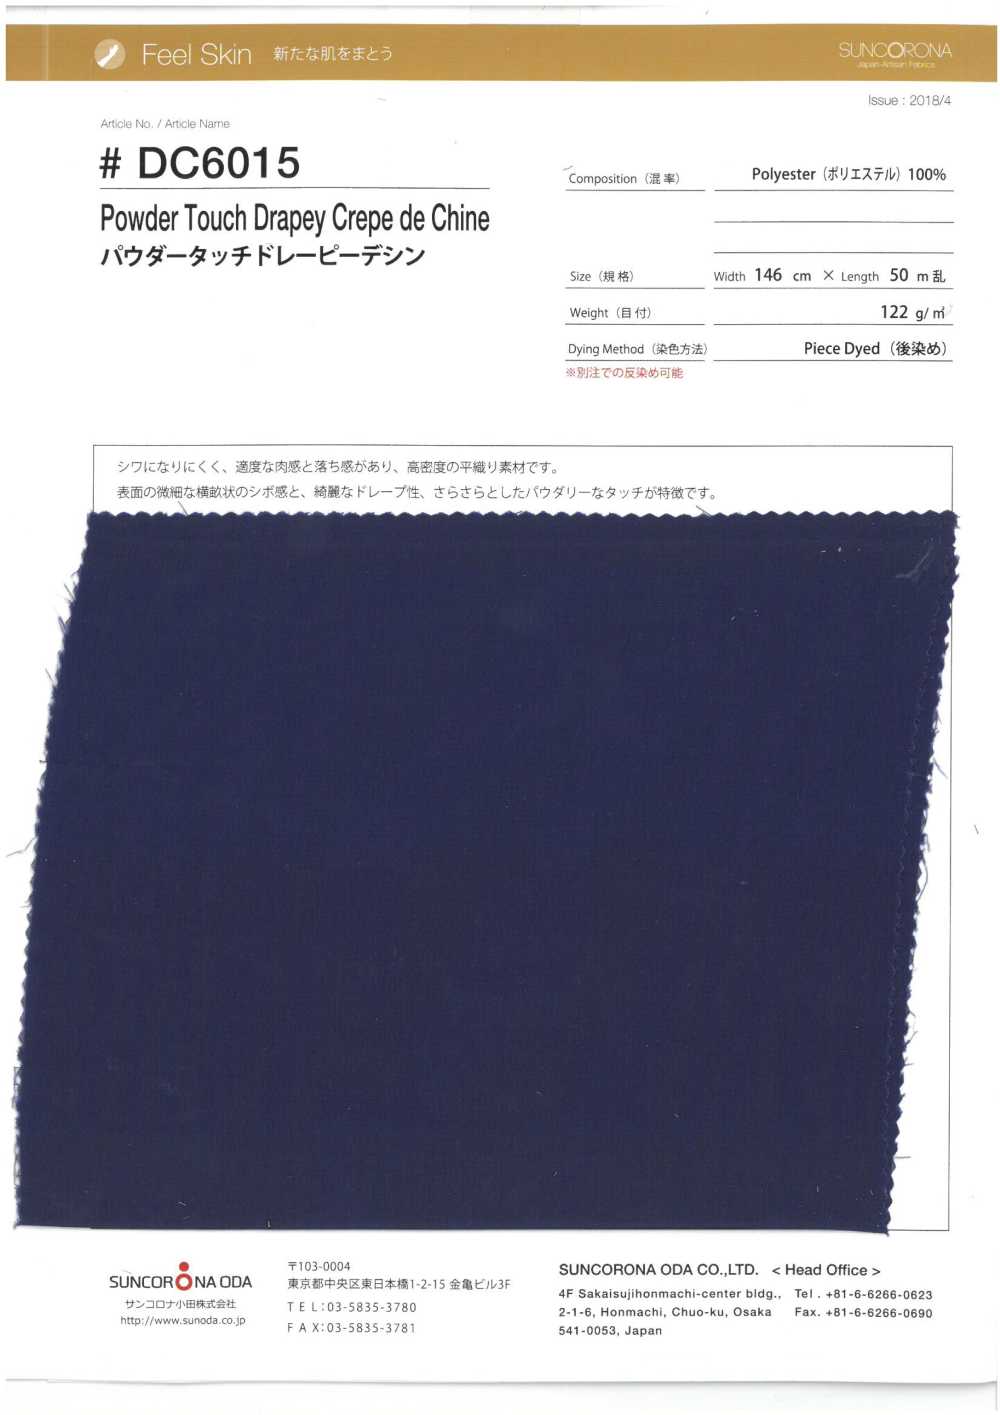 DC6015 Polvo Elástico Drapey De Chine[Fabrica Textil] Suncorona Oda